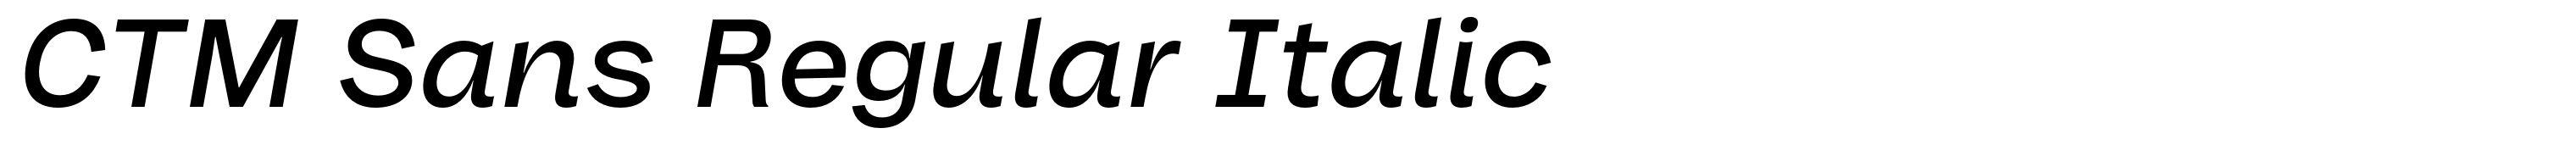 CTM Sans Regular Italic